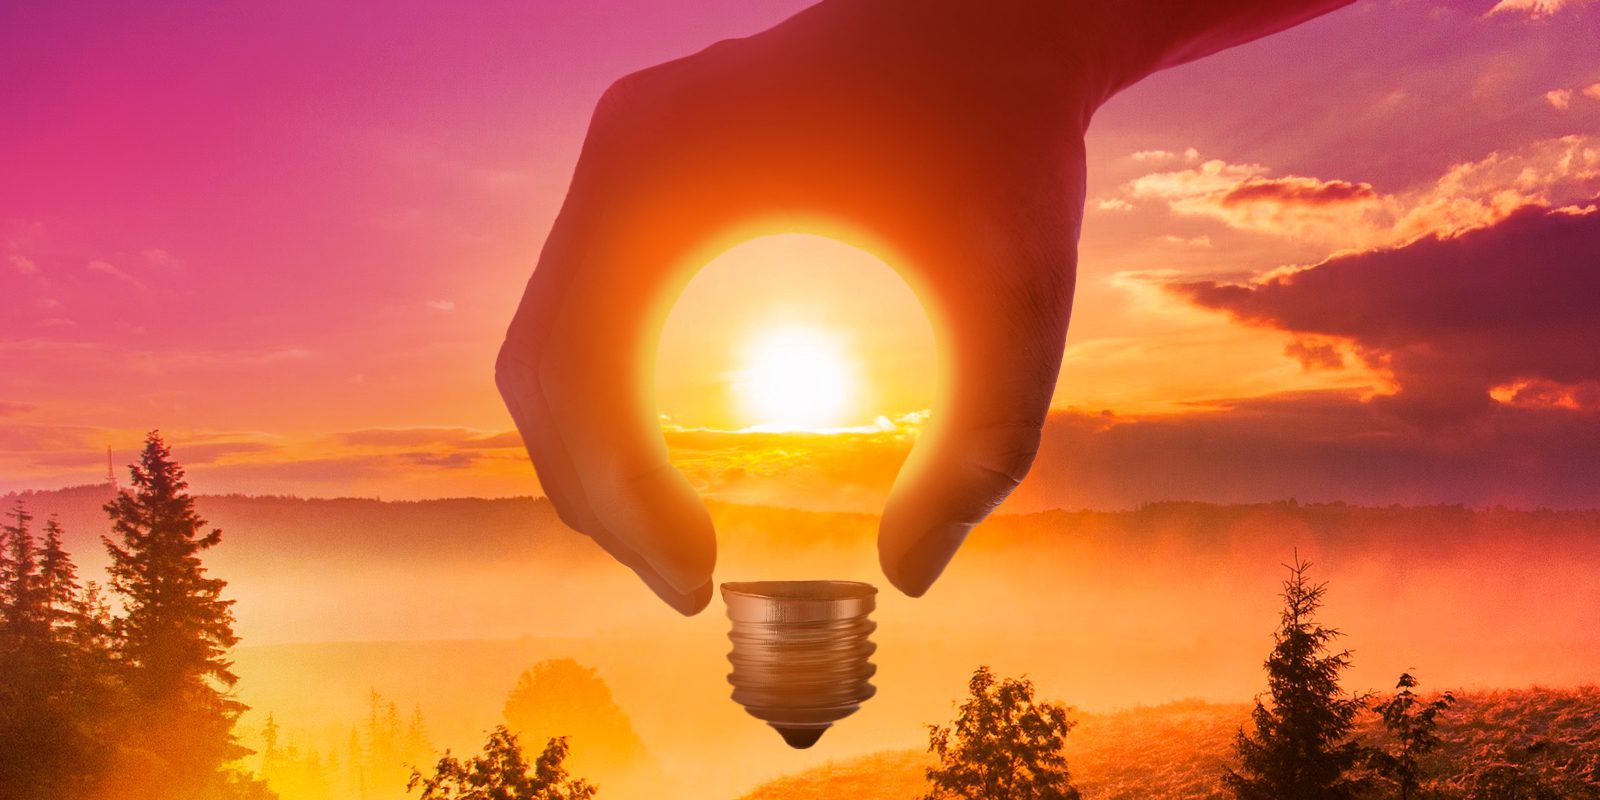 Hand holding a lightbulb with the sun as the light